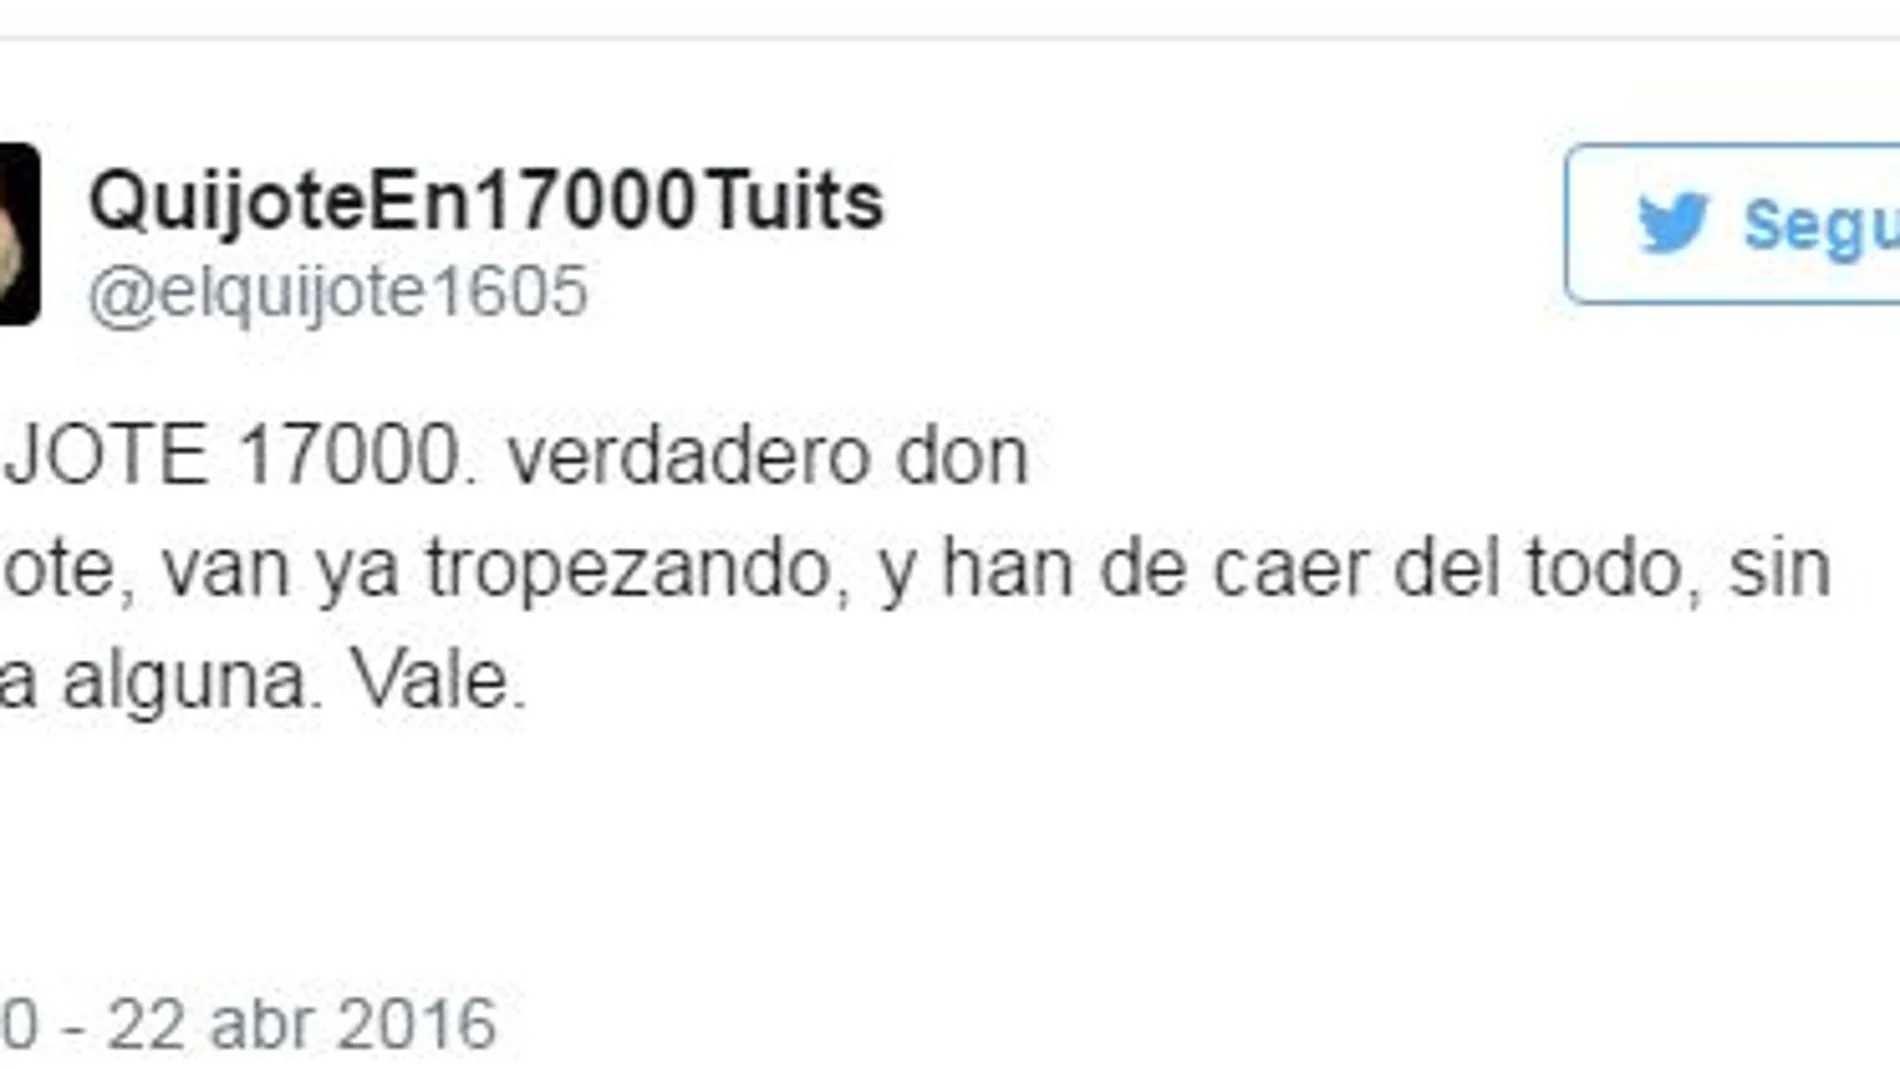 El Quijote en 17.000 tuits llega a su fin en Alcázar de San Juan